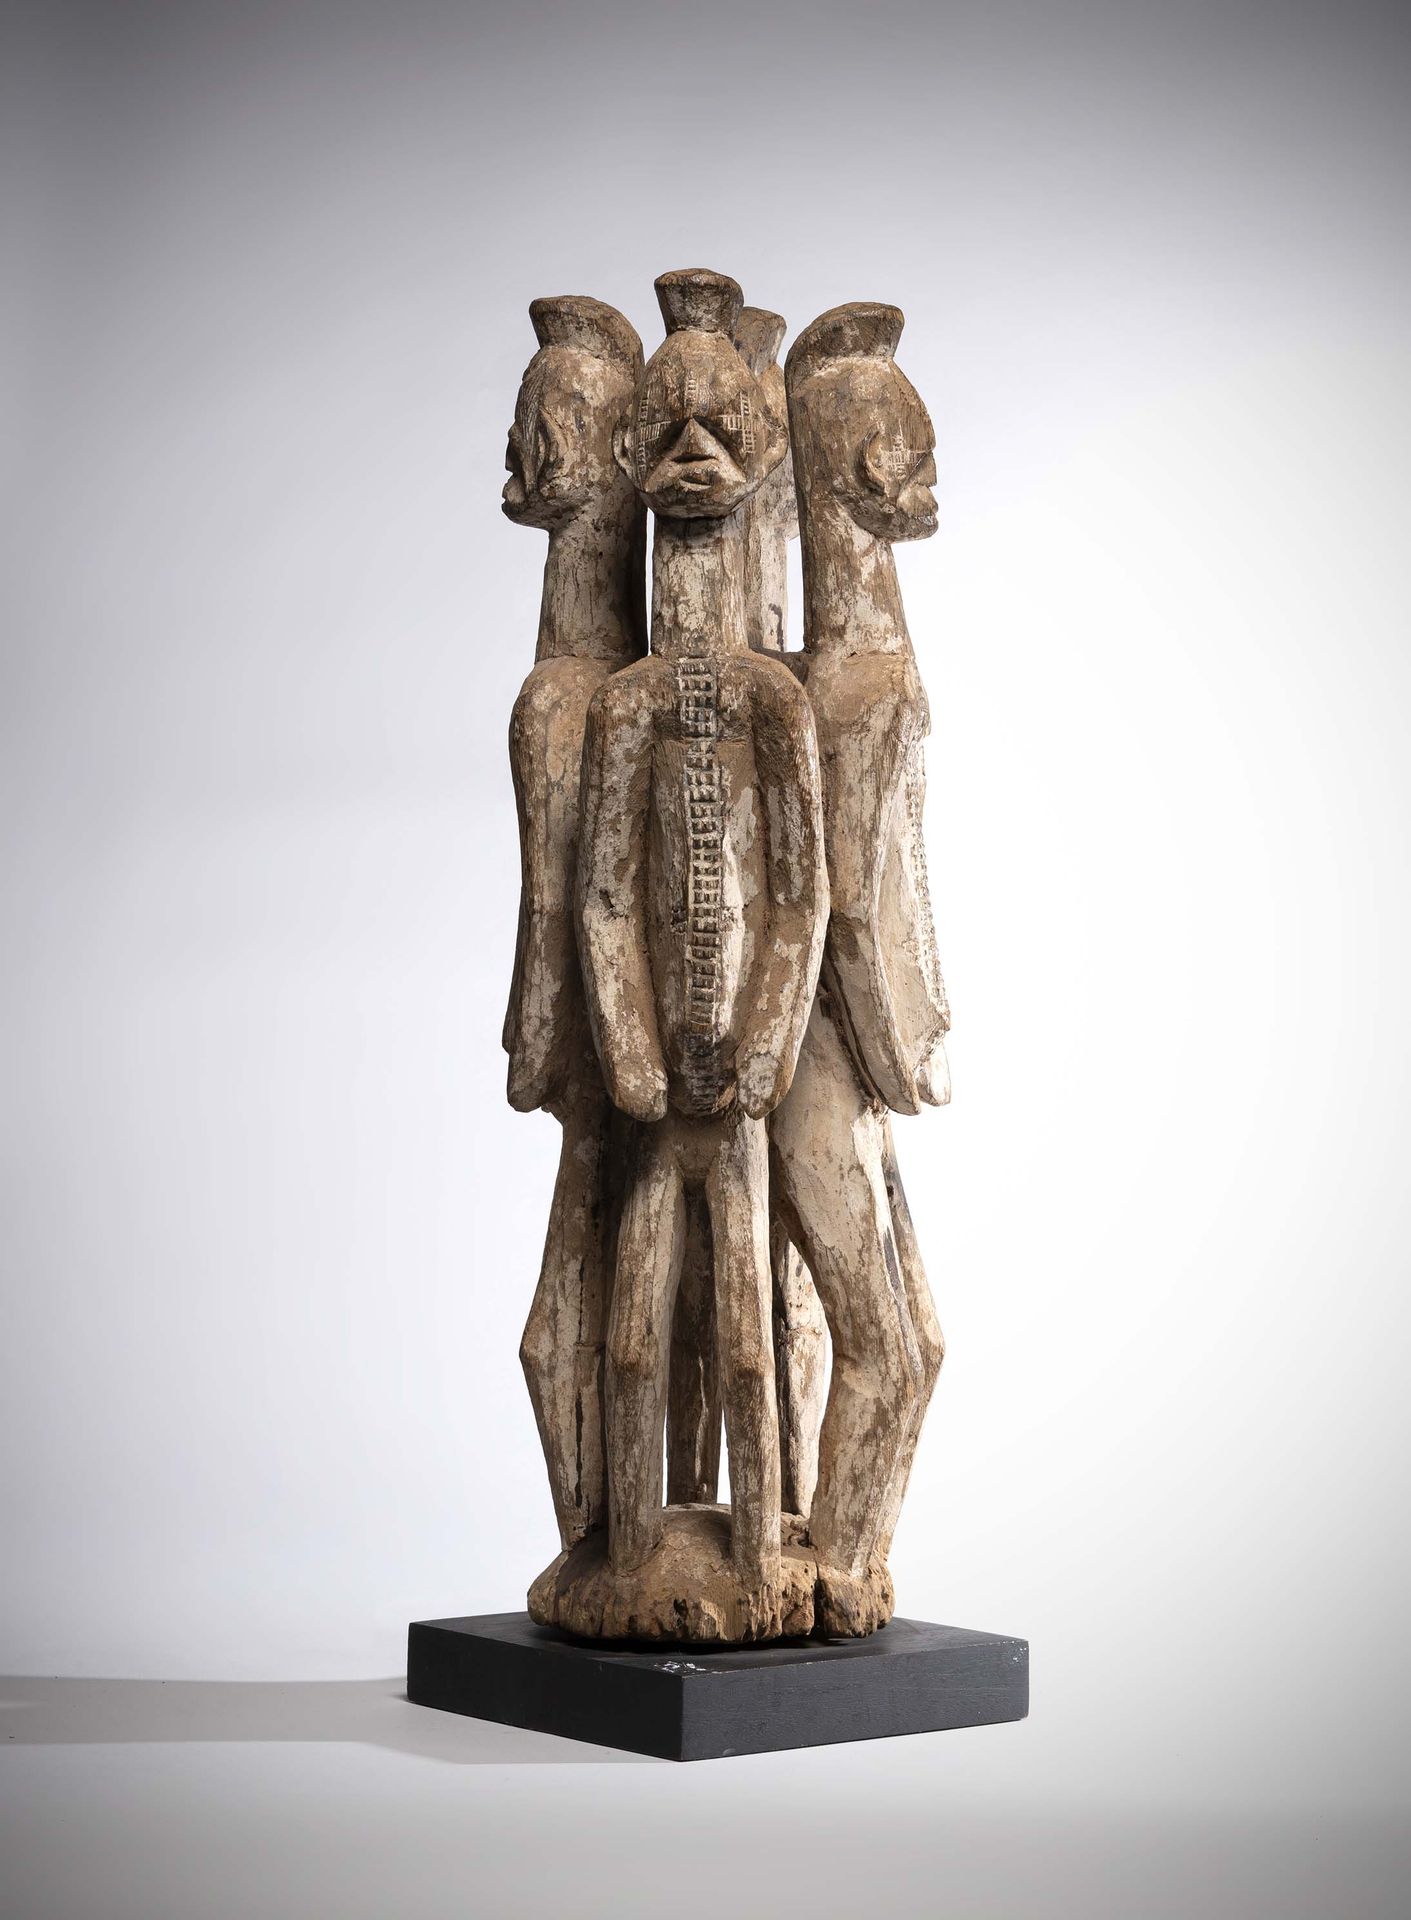 Null 伊博

(尼日利亚）重要的祭坛雕塑，由四座男性和女性雕像组成，部分被高岭土覆盖。

精心雕刻的脸部带有传统的 "一 "字形额头疤痕 高：66厘米